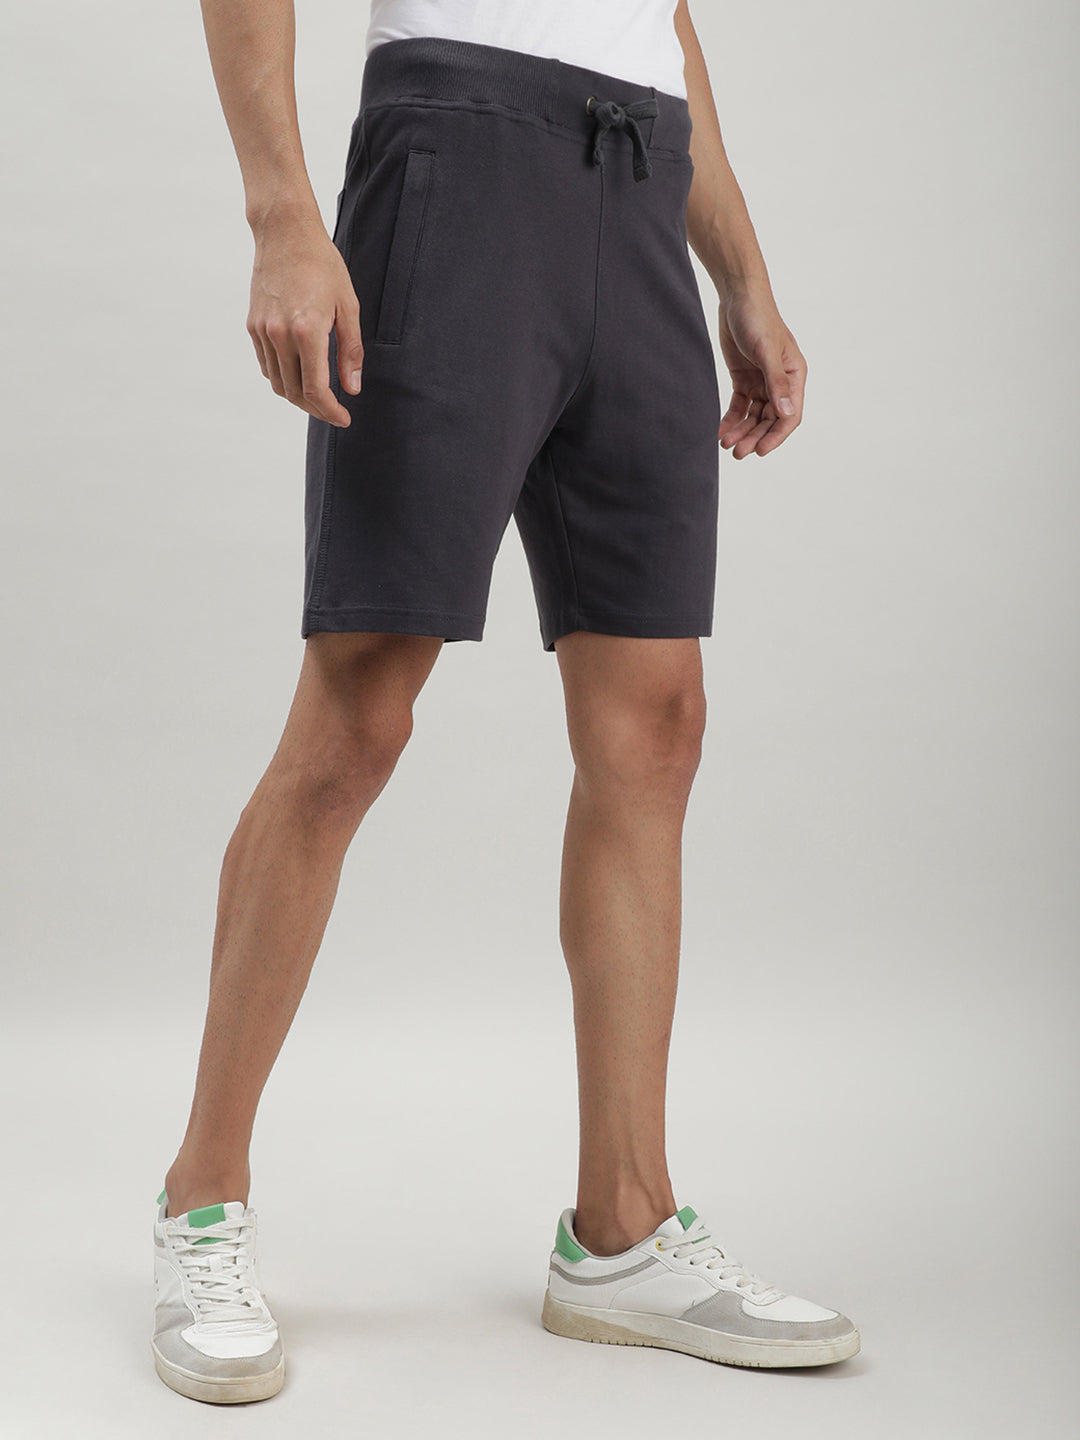 Deep Grey Shorts for Men